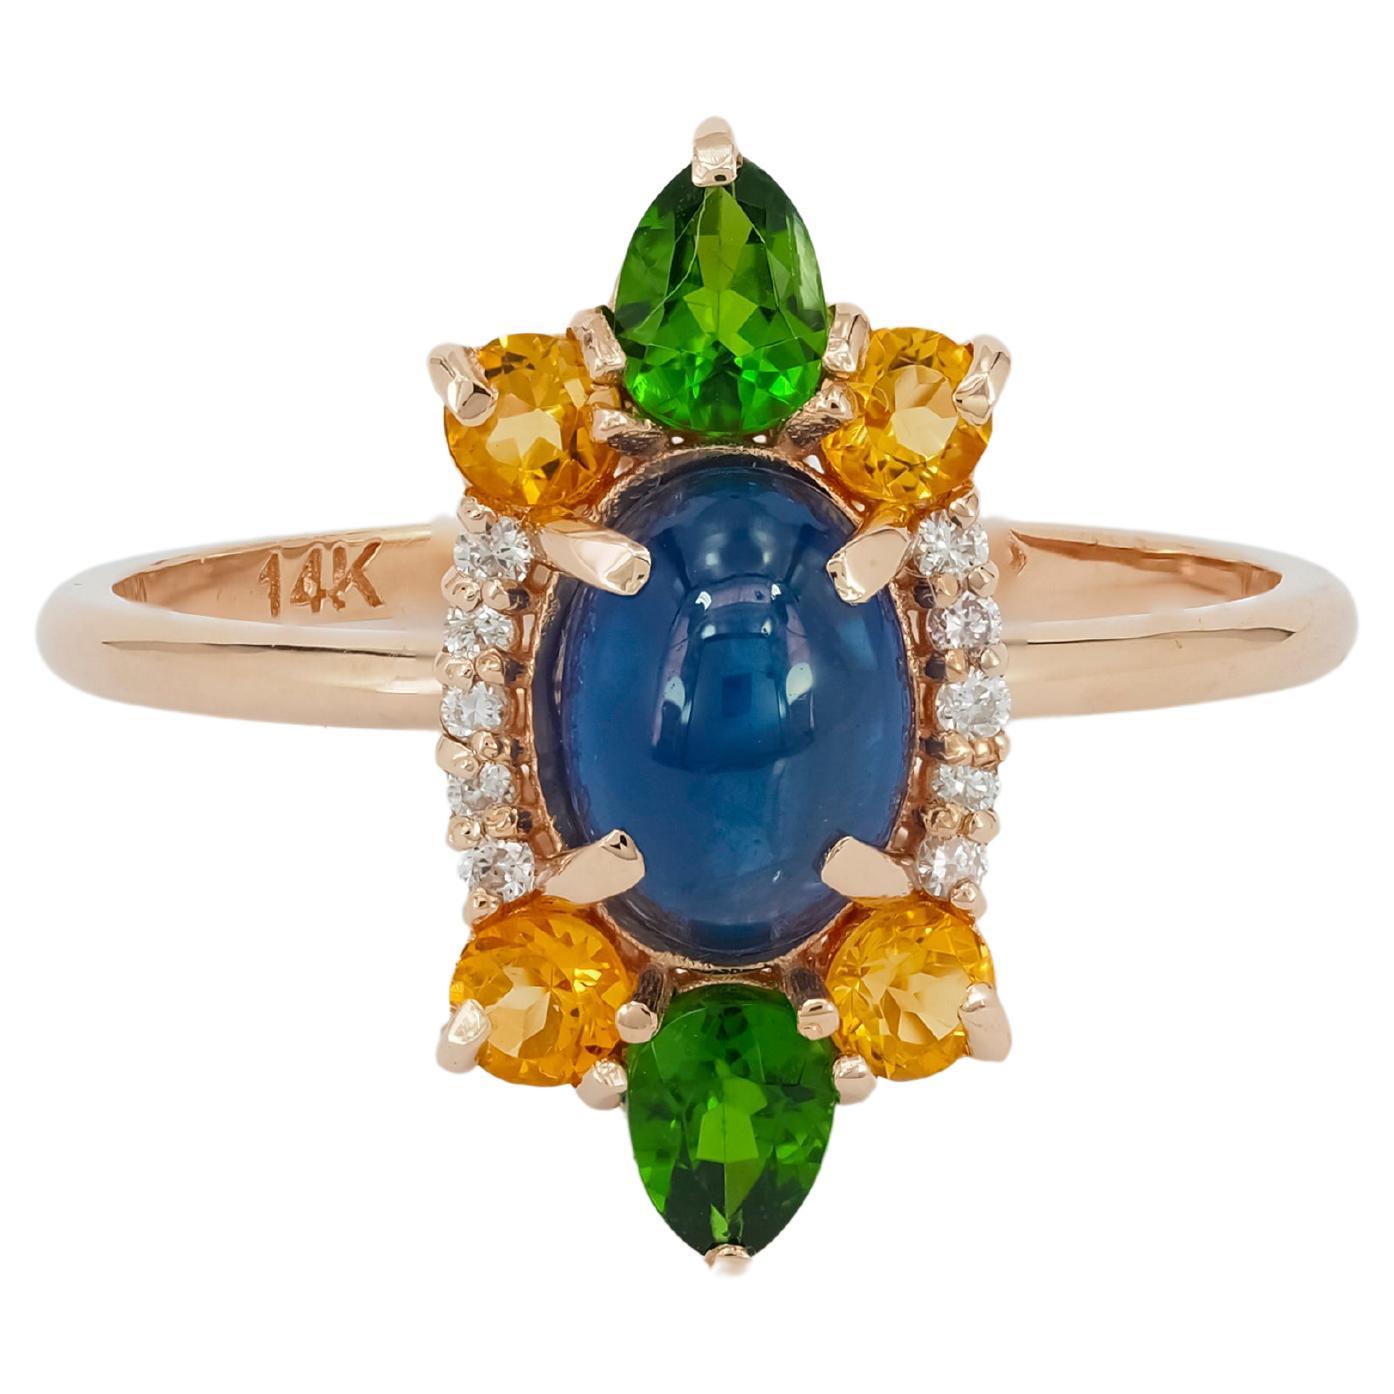 14k Gold Ring mit Cabochon Sapphire, Chrom Diopside, Saphire, Diamanten. 